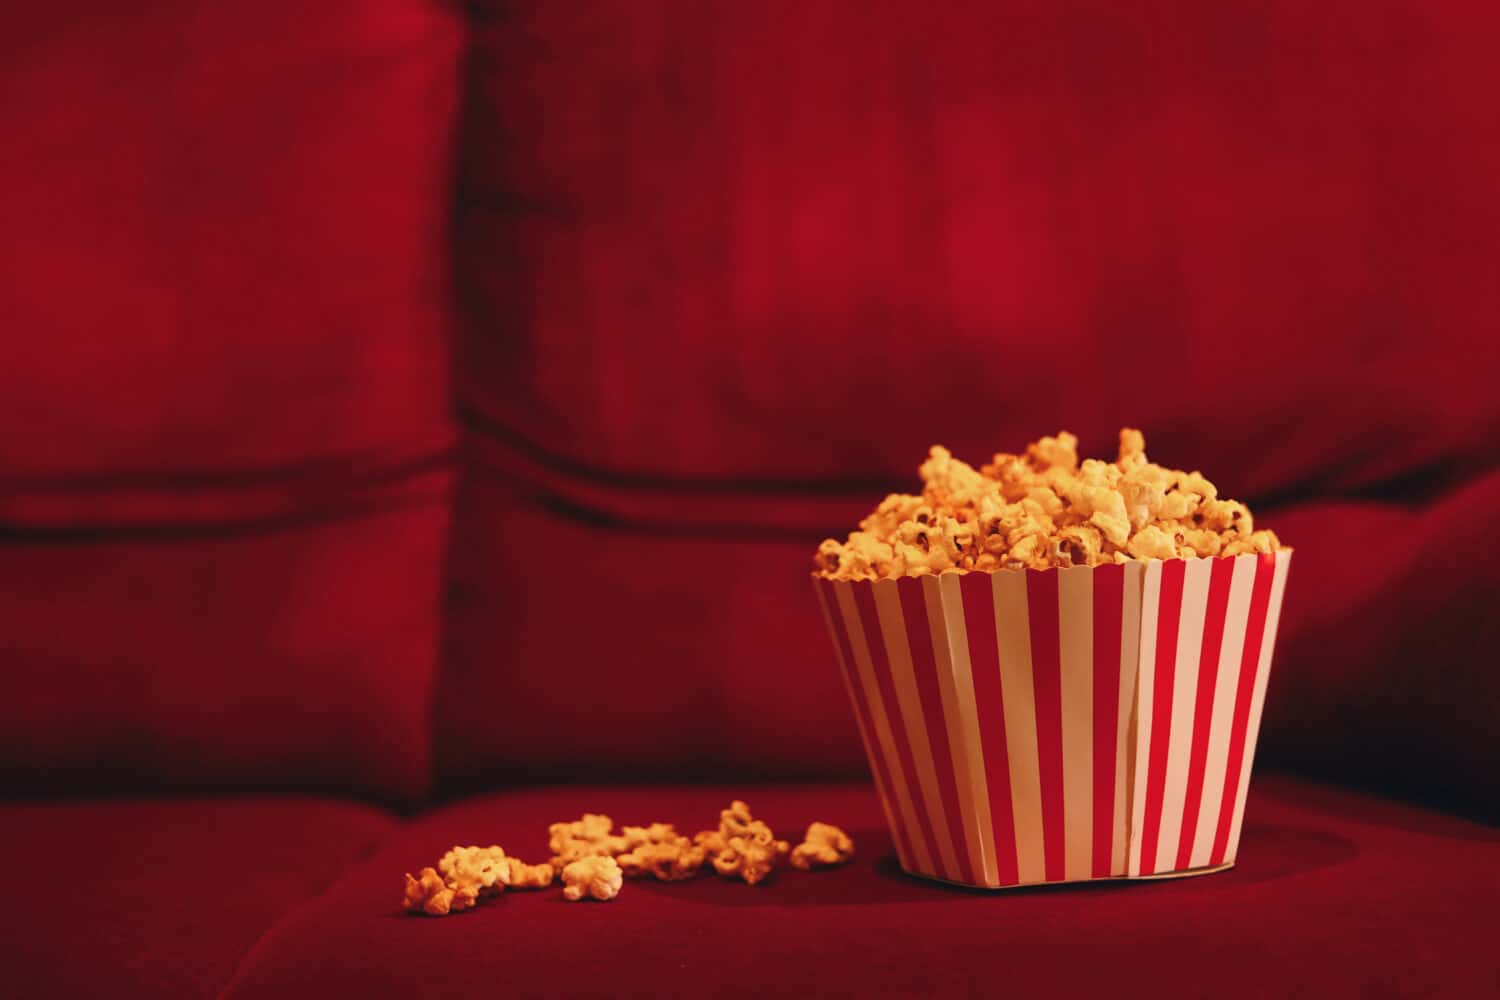 Popcorn bucket on red sofa at cinema.